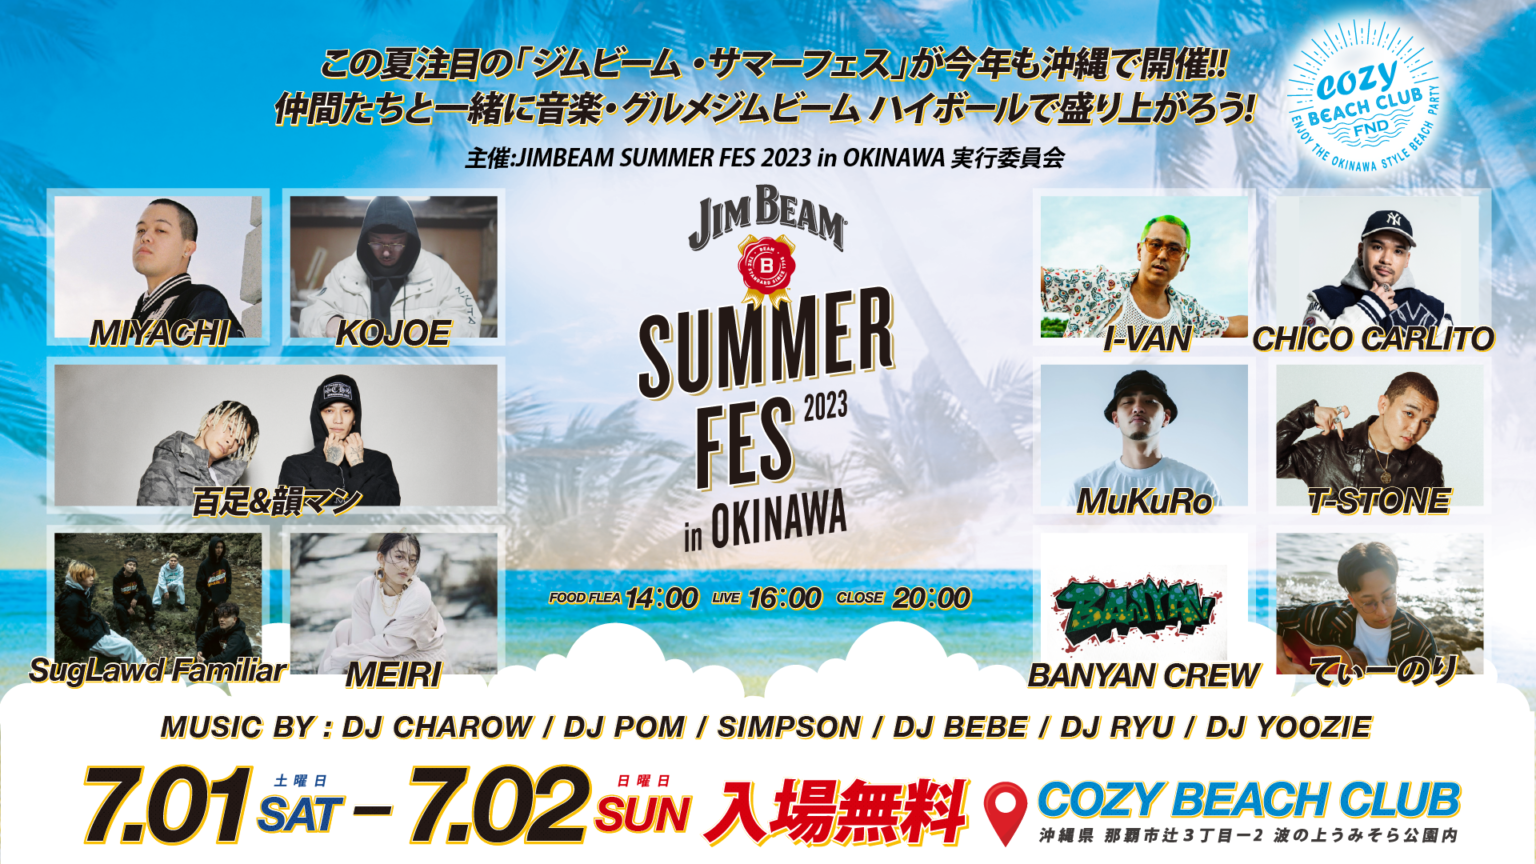  JIM BEAM SUMMER FES 2023 In Okinawa